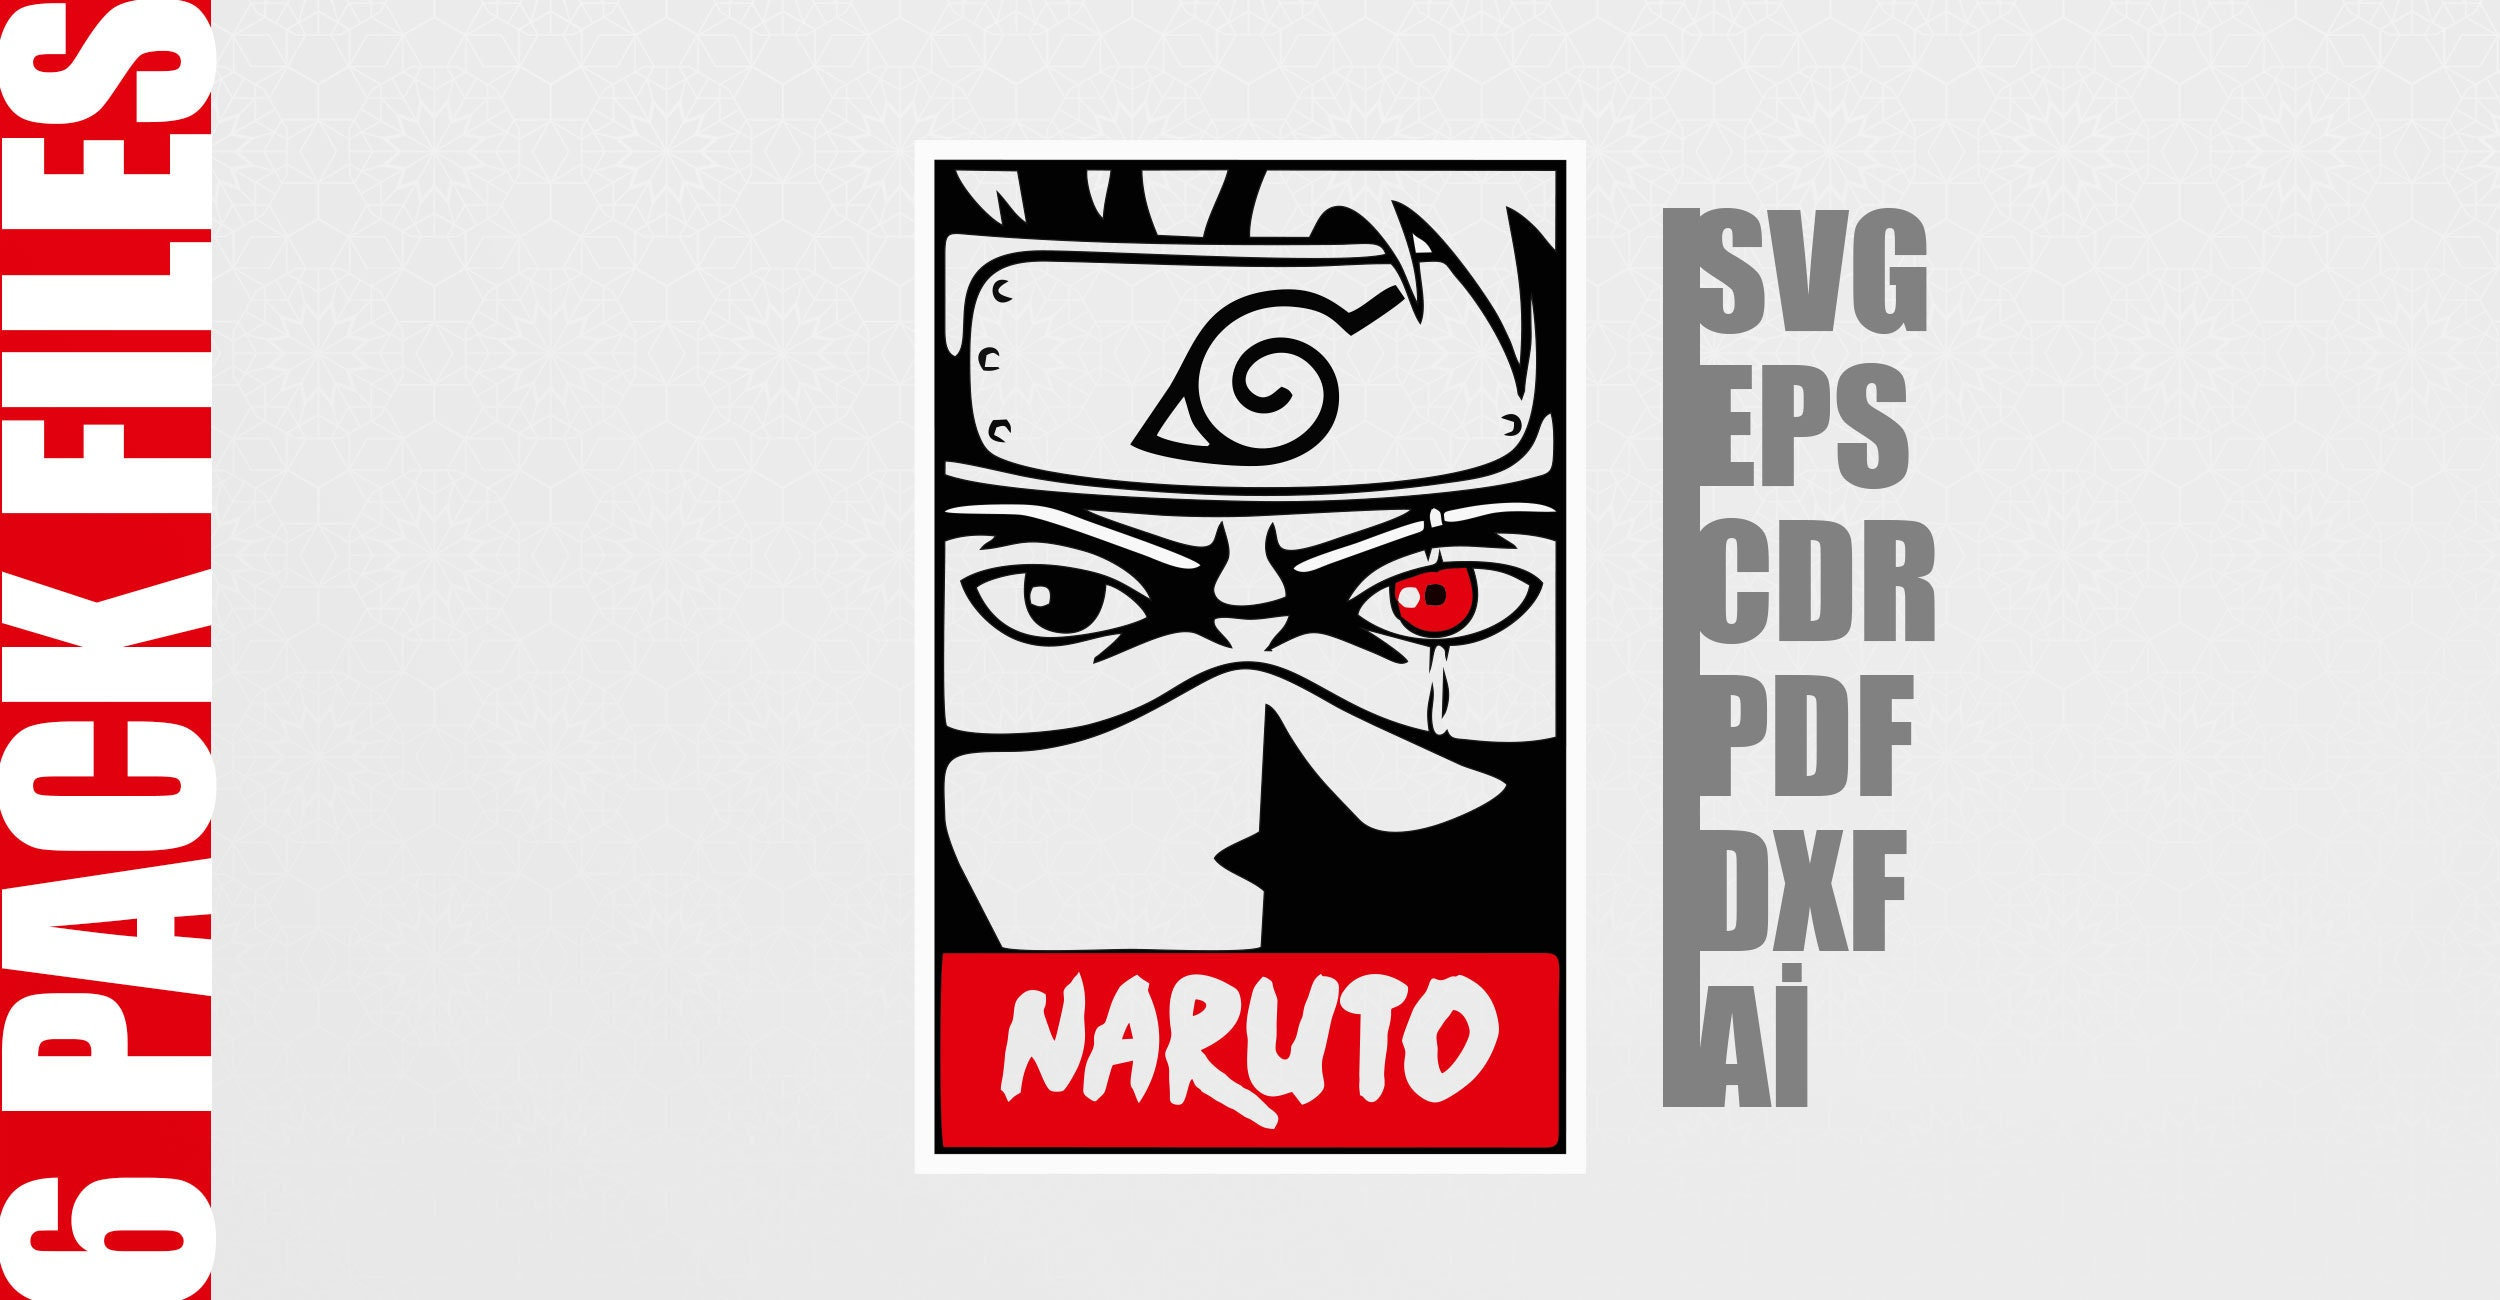 Akatsuki Logo PNG vector in SVG, PDF, AI, CDR format